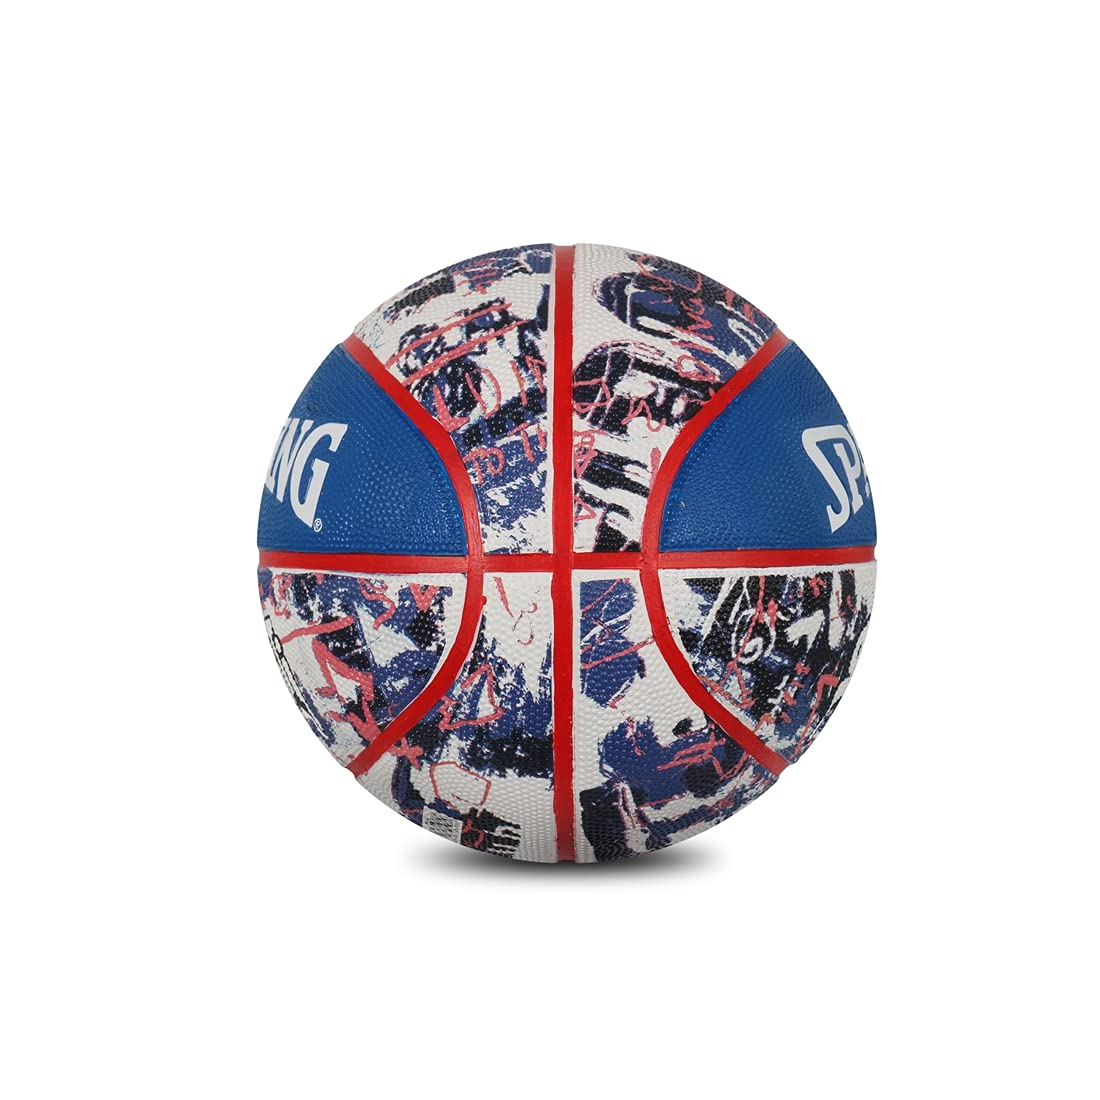 Spalding Garffiti Basketball, Blue/White/Red - Size 7 - Best Price online Prokicksports.com